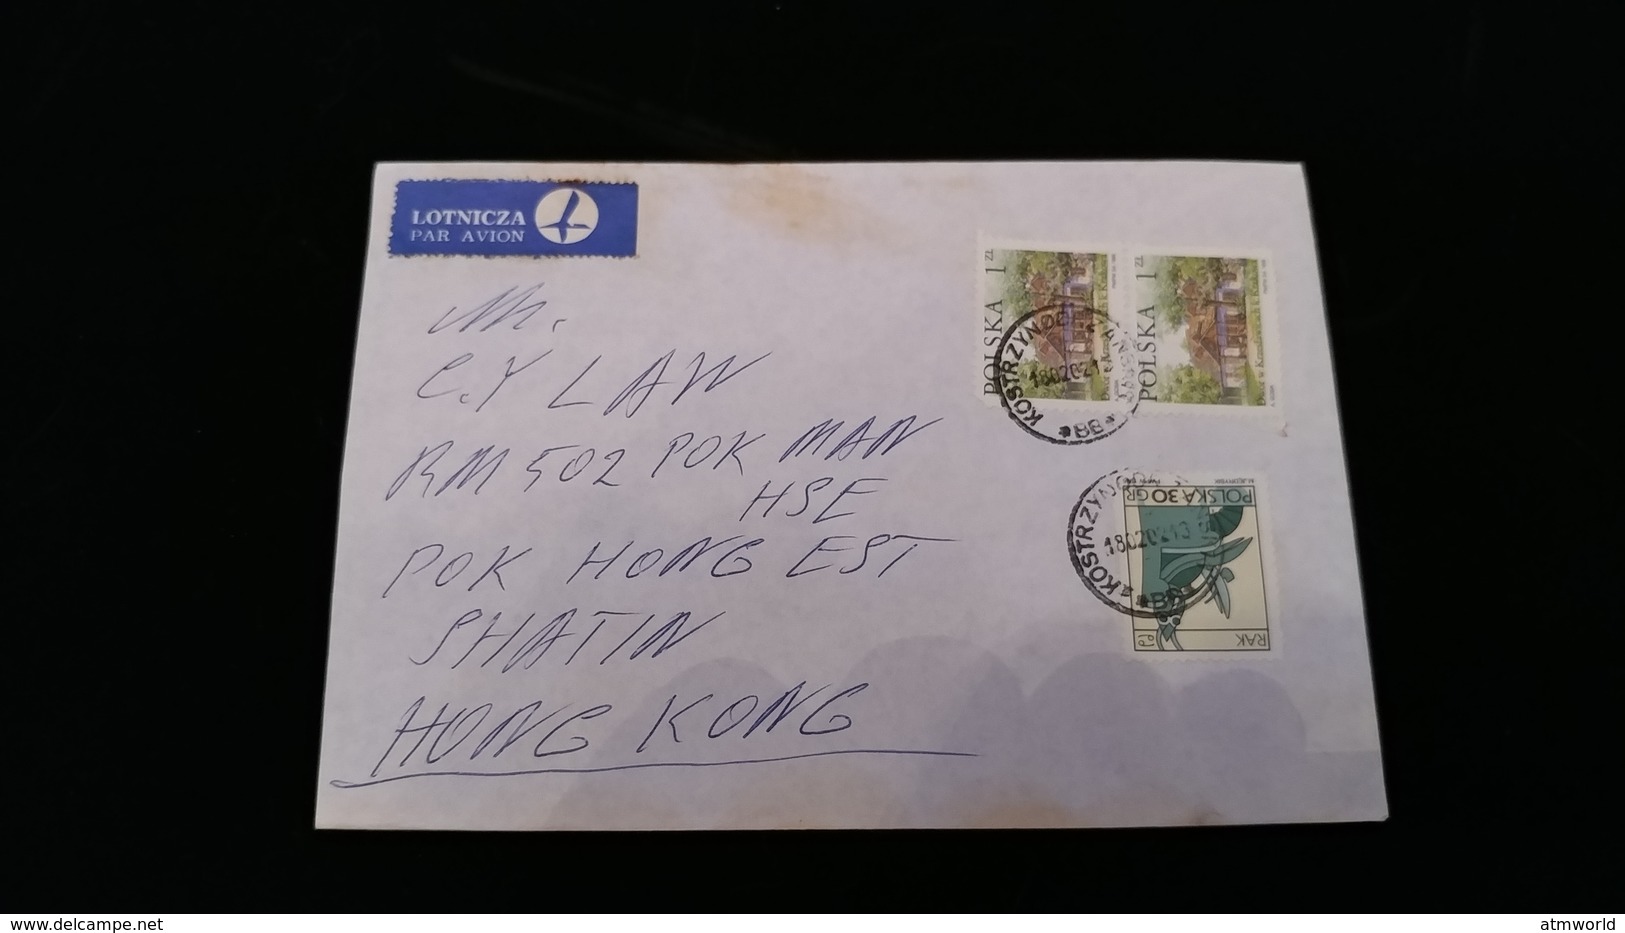 Postal Cover from Polska to Hong Kong